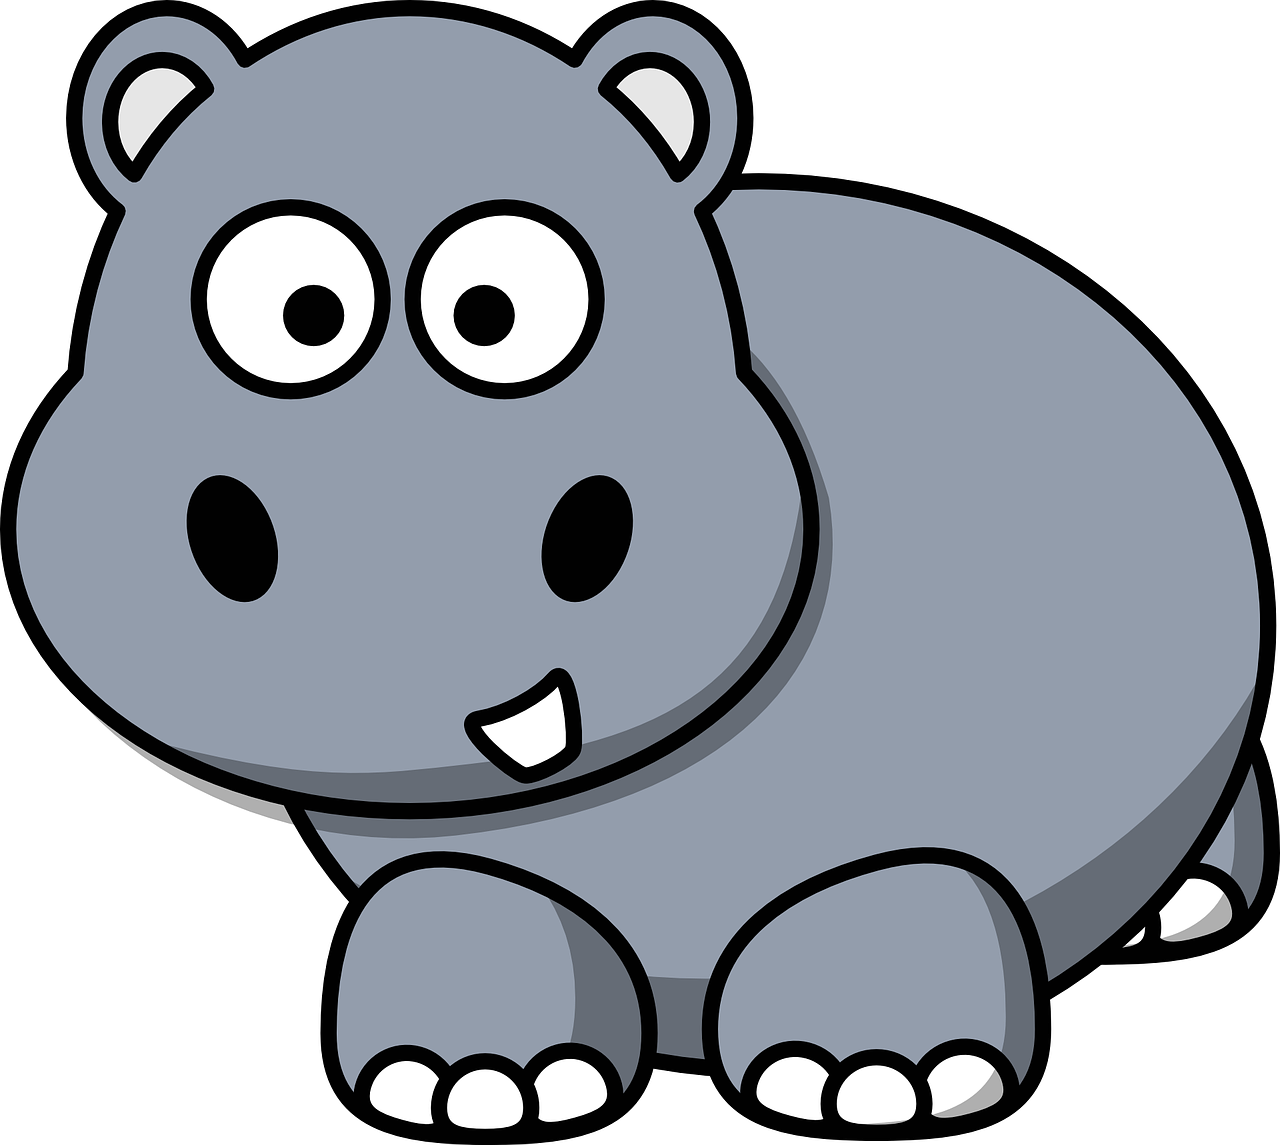 Hippopotamus at getdrawings com. Cute clipart hippo